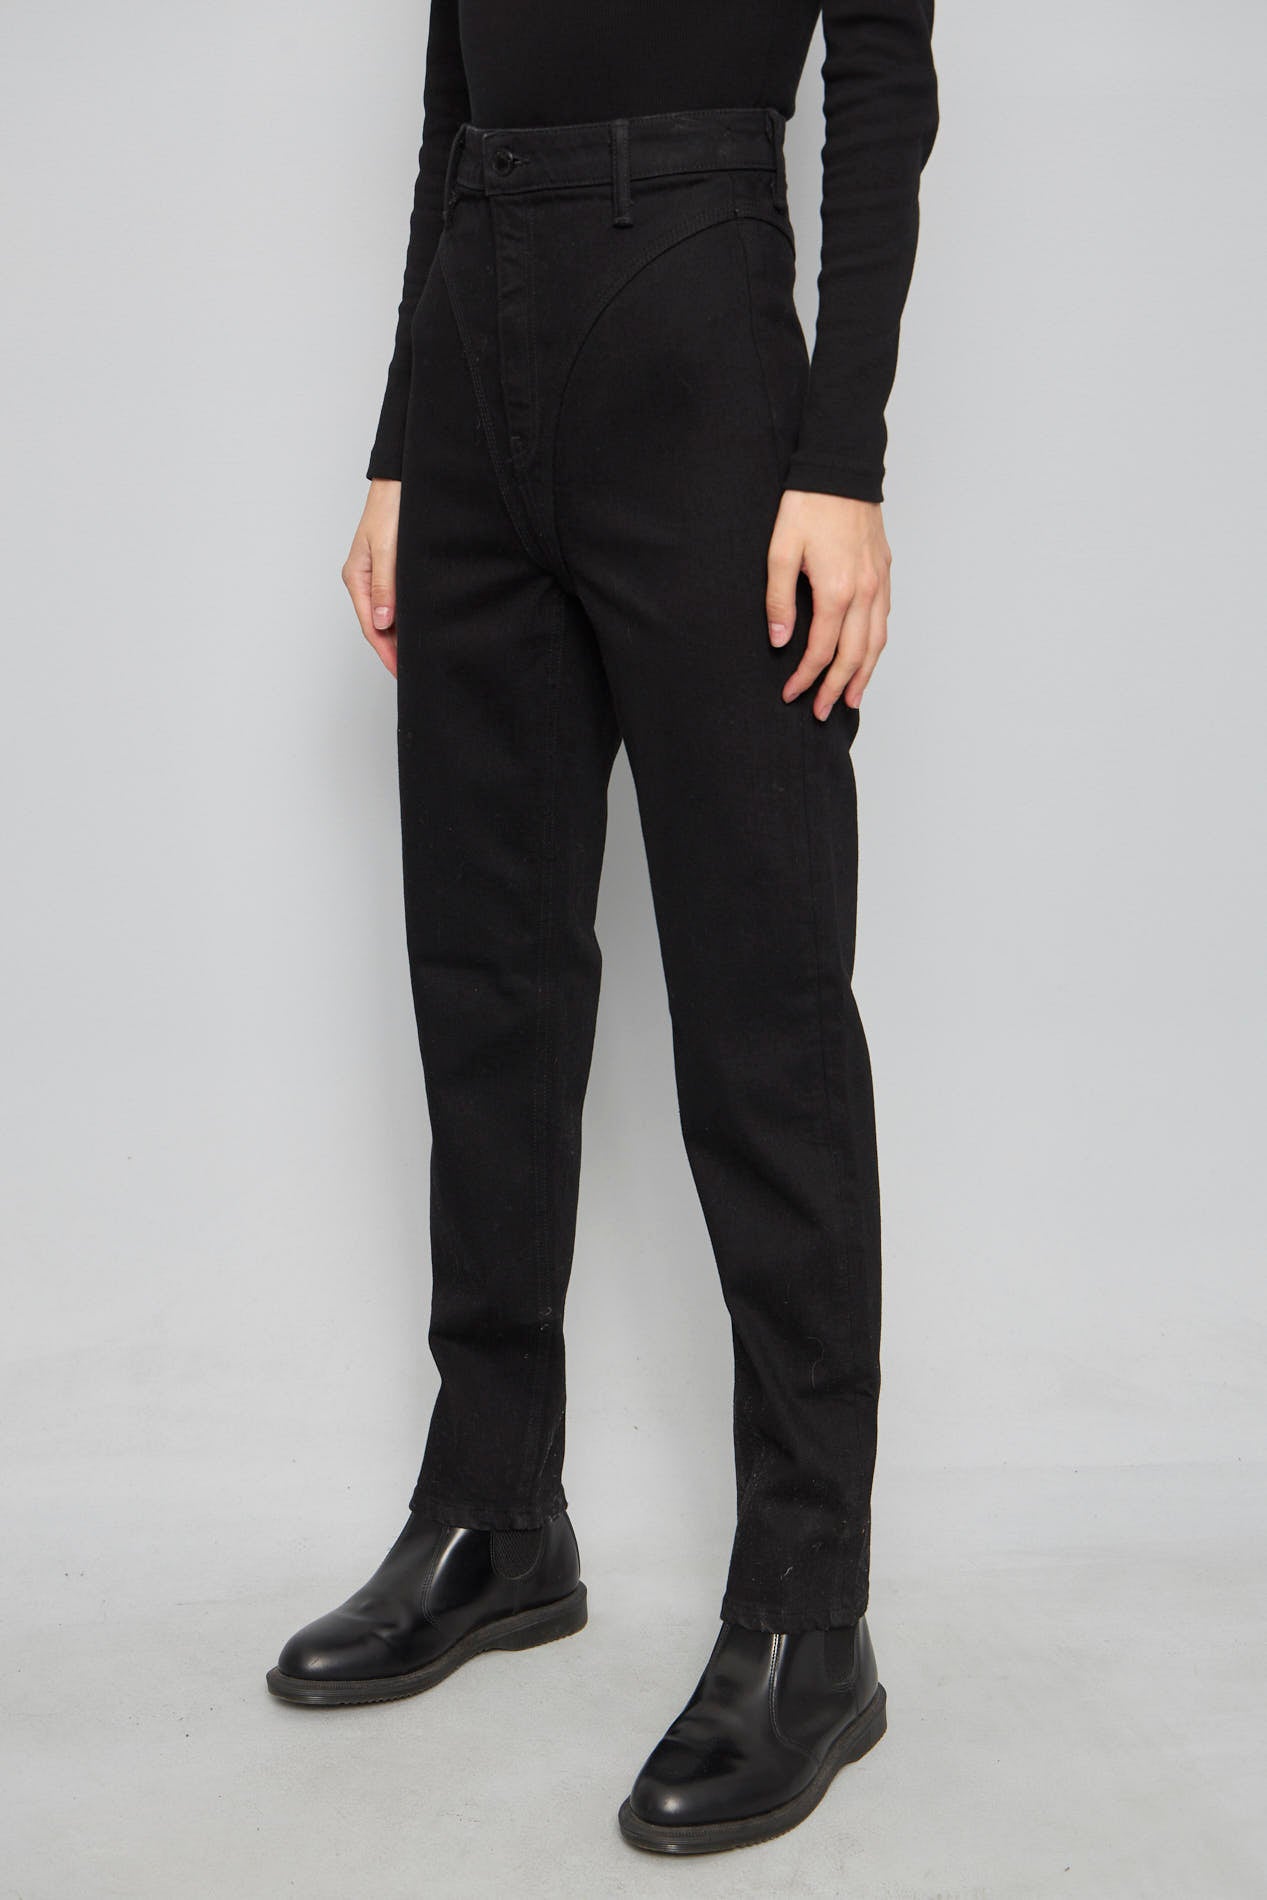 Jeans casual  negro alexander wang  talla Xs 881